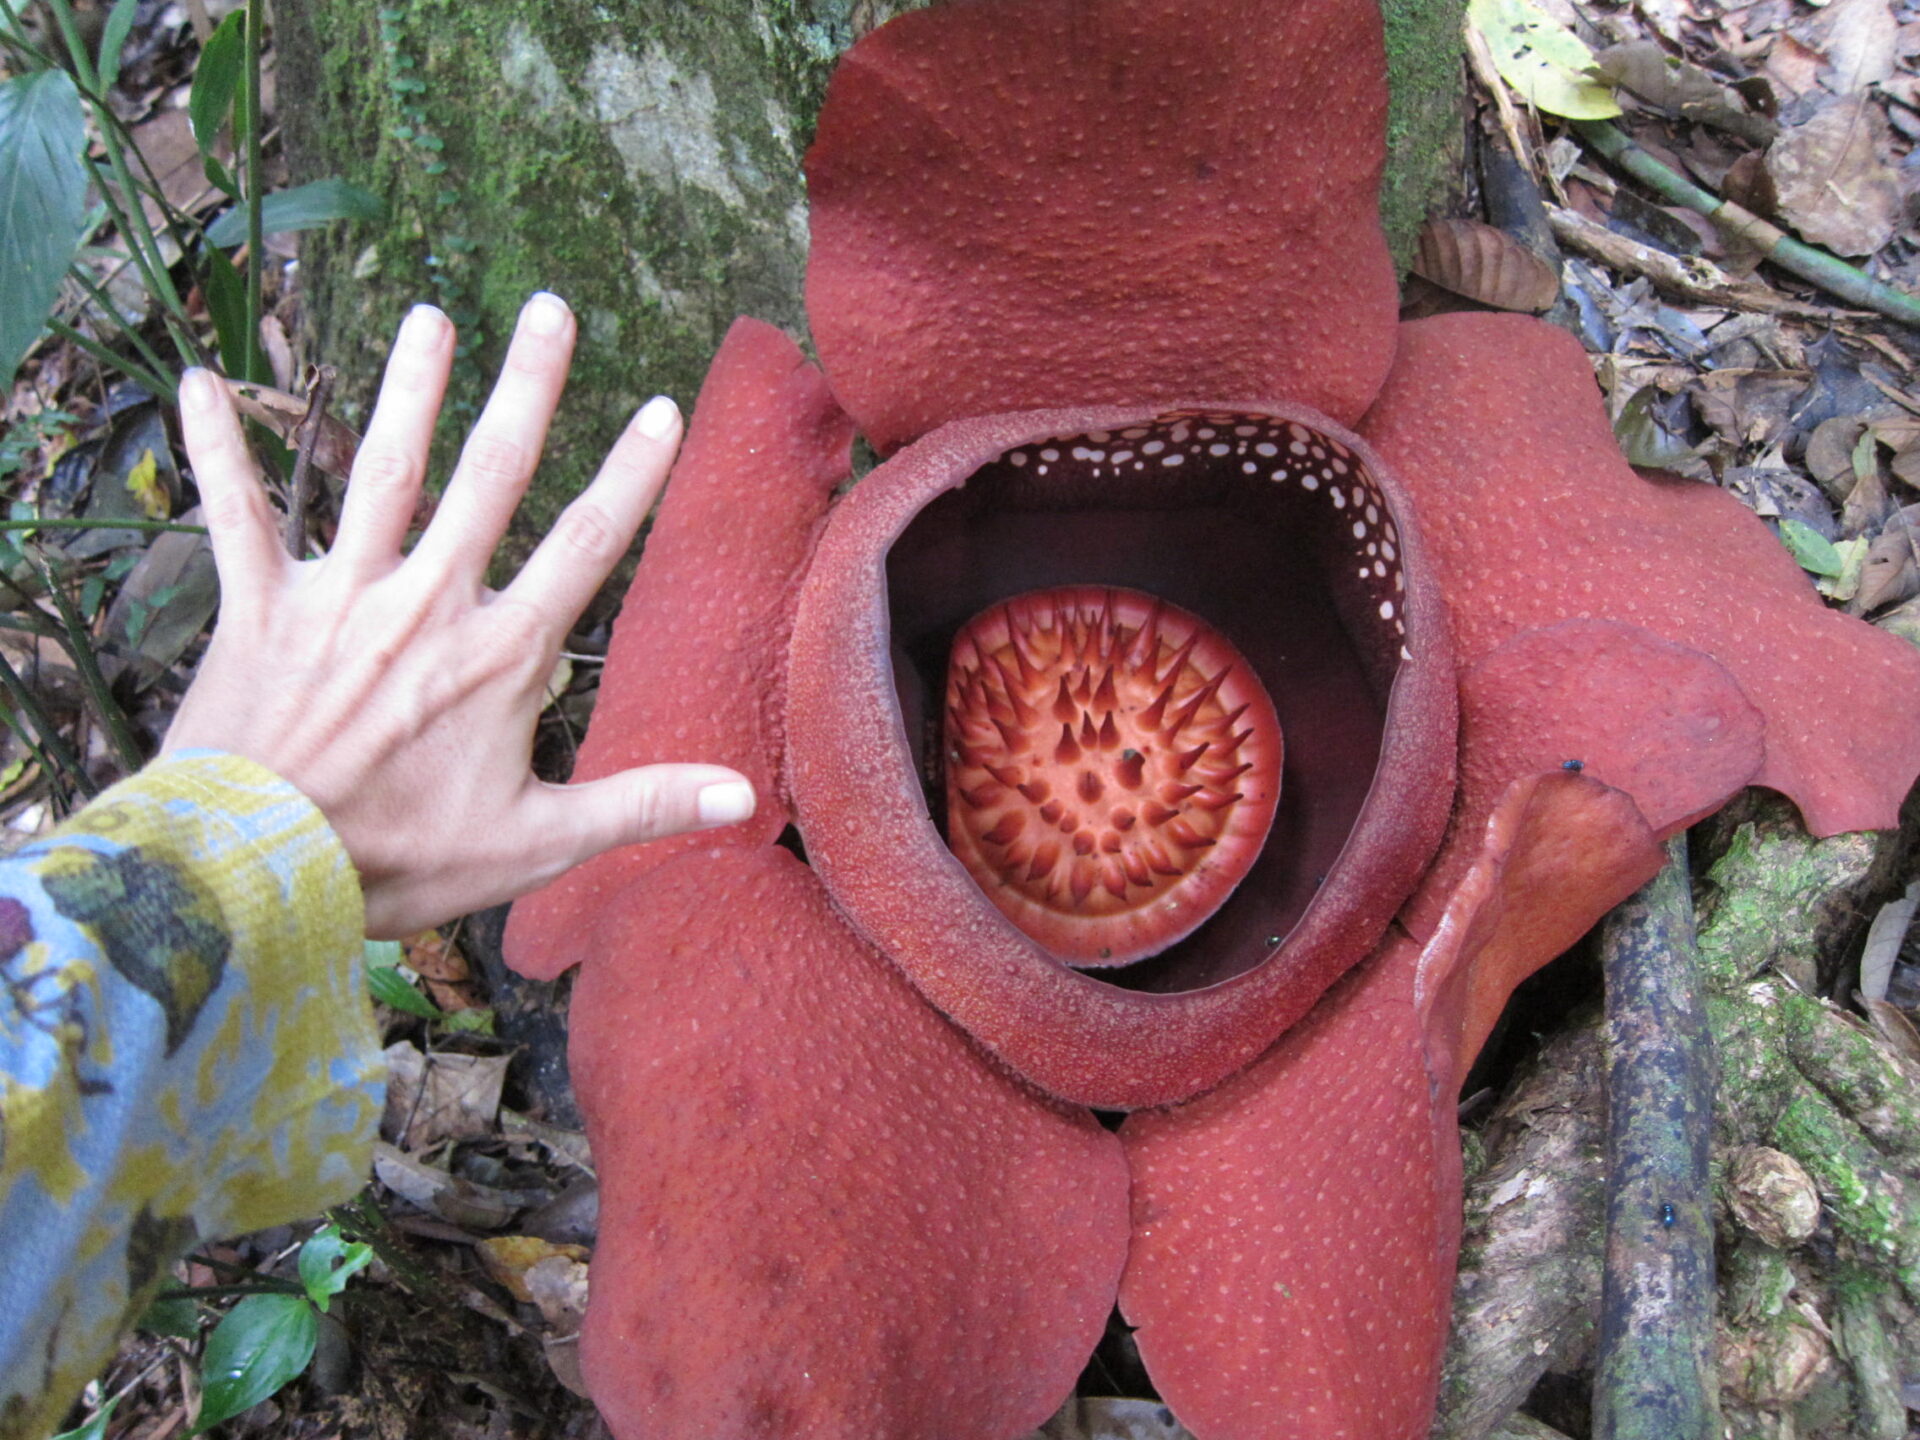 Rafflesia flower and Meghan's Hand!